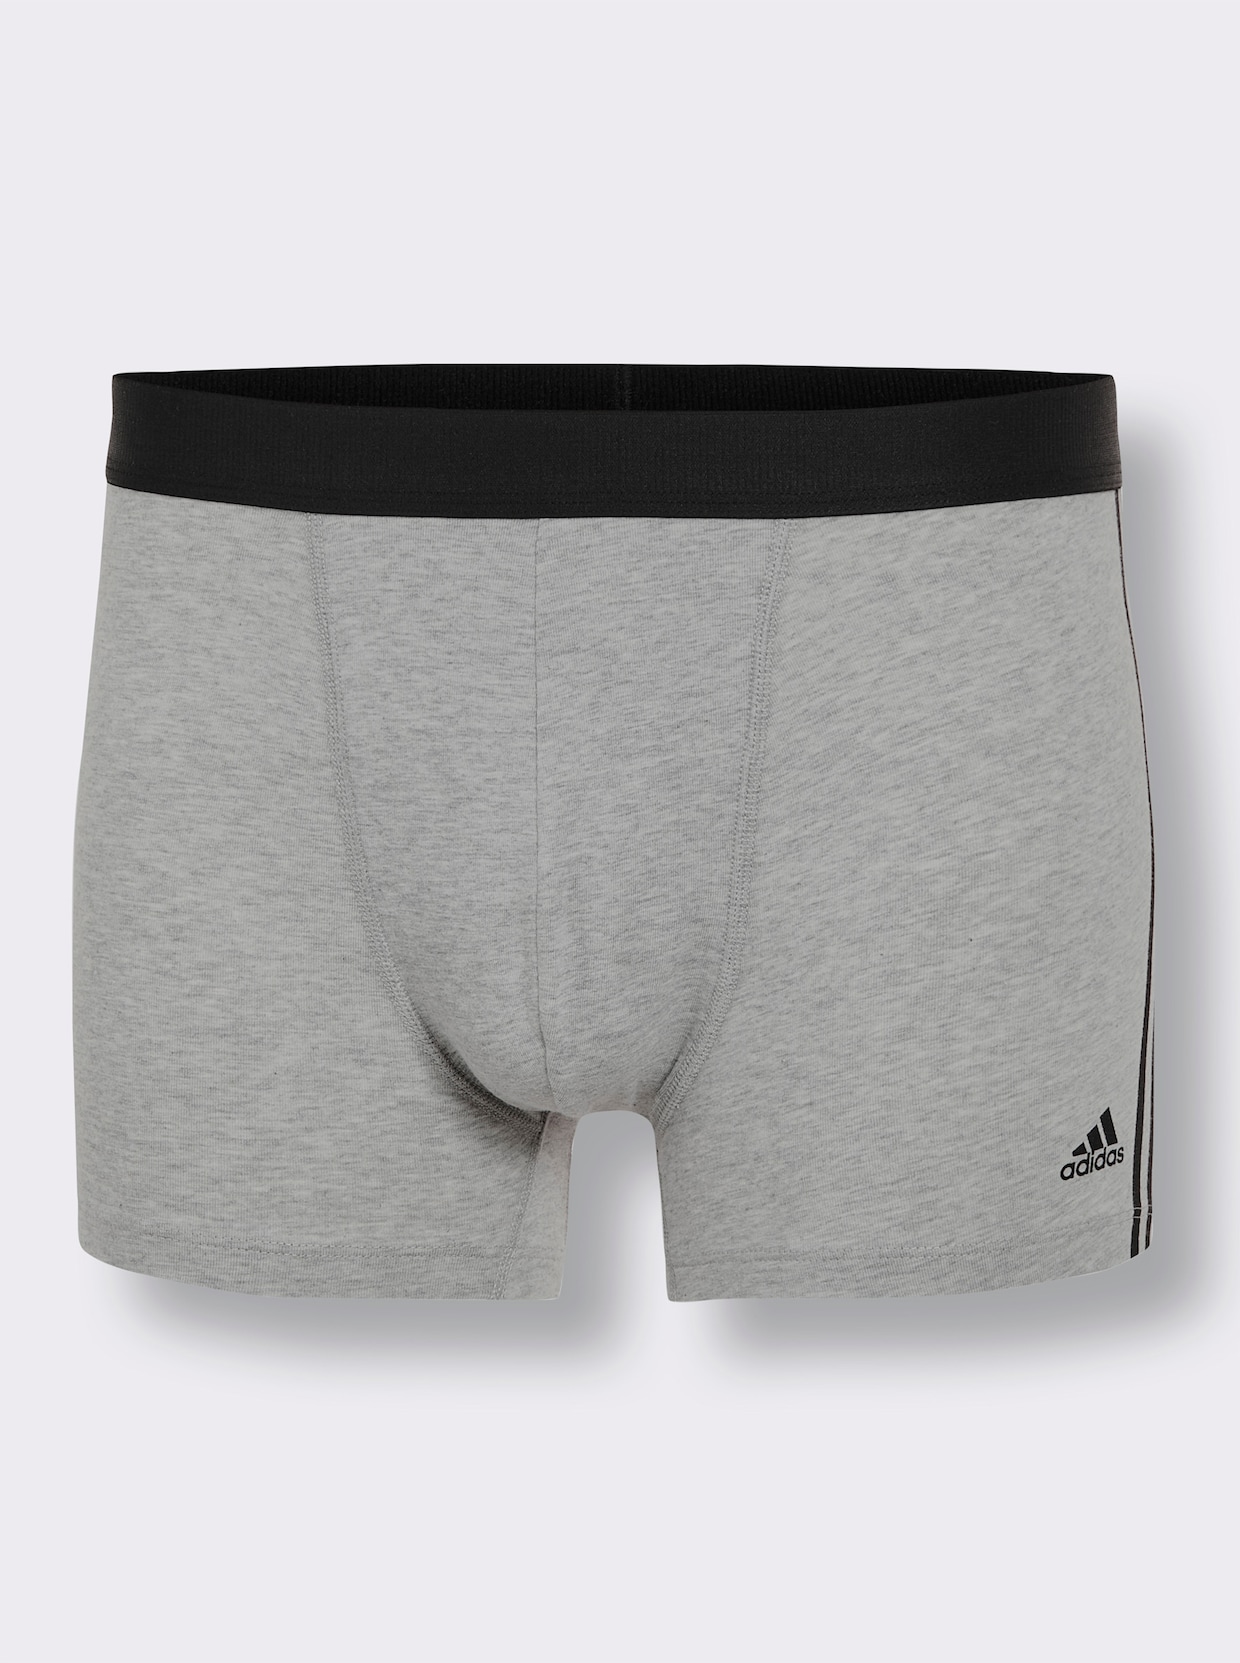 Adidas Pants - weiss + grau + schwarz